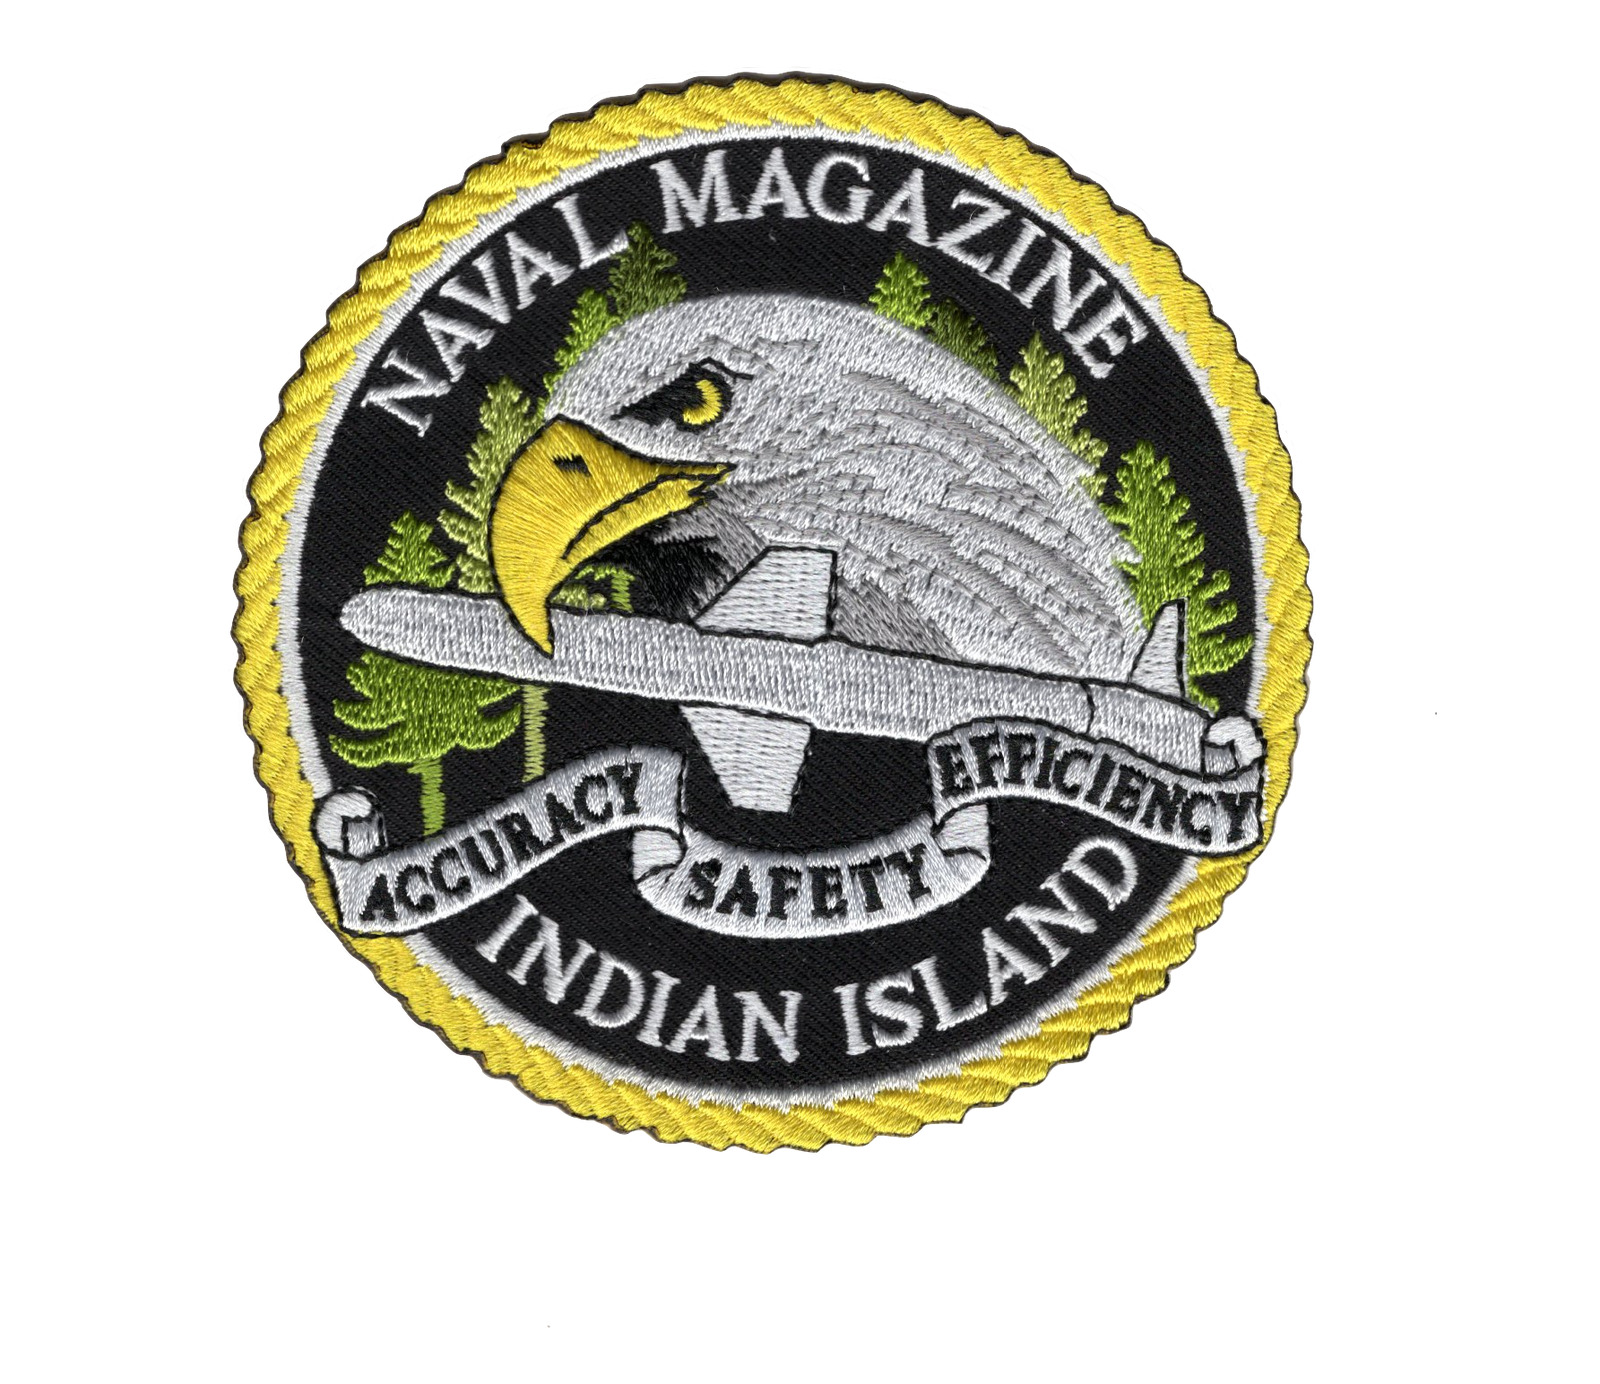 US Naval Magazine Indian Island patch